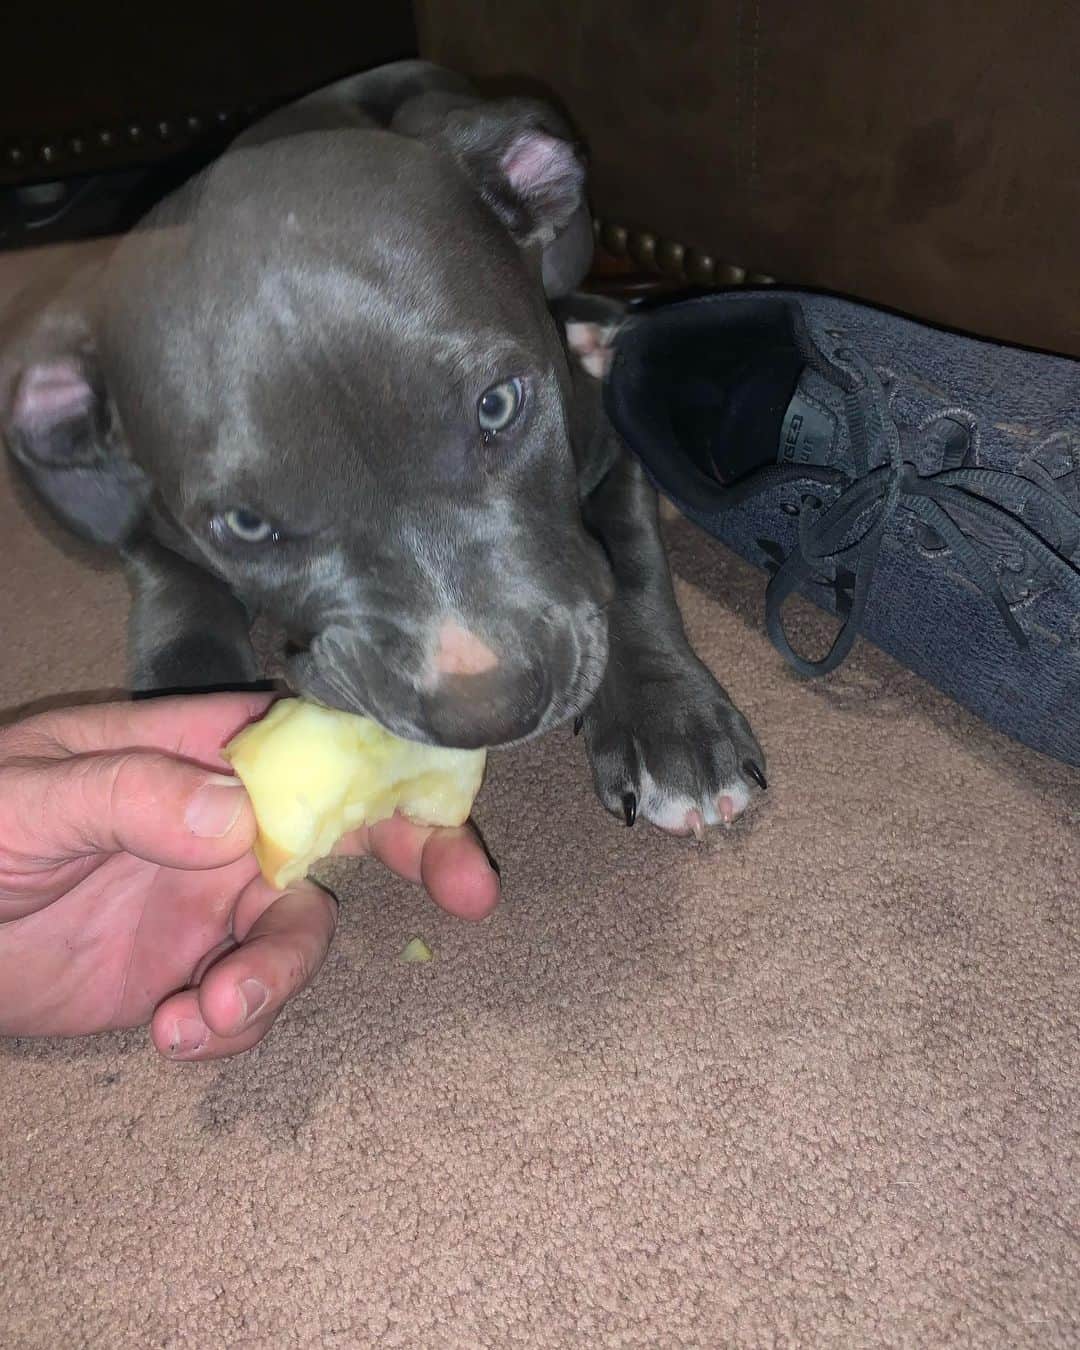 Blue American Bulldog eating an apple